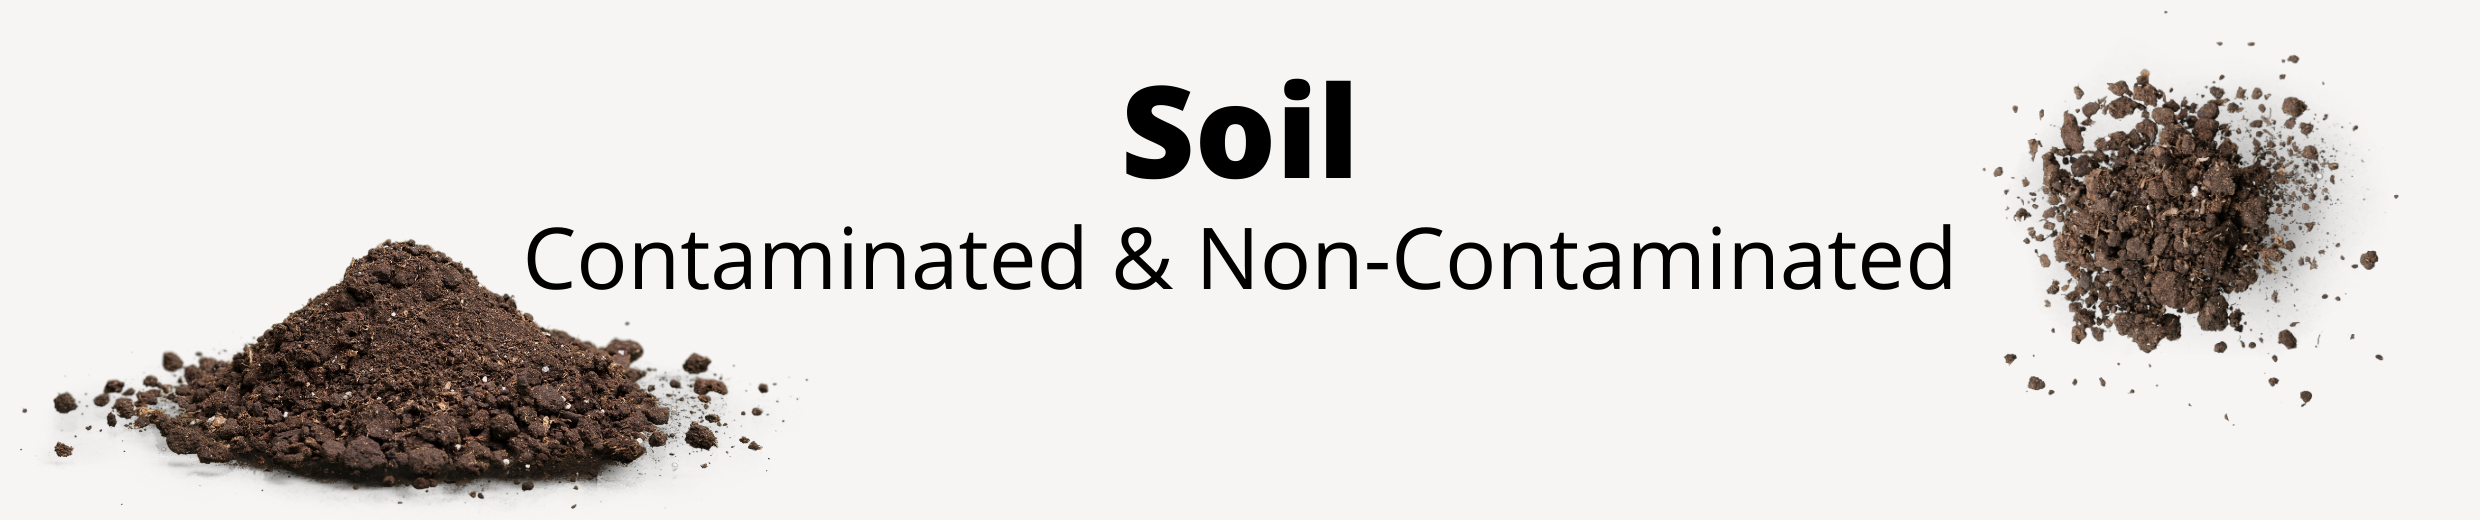 Soil Contaminated and Non-Contaminated